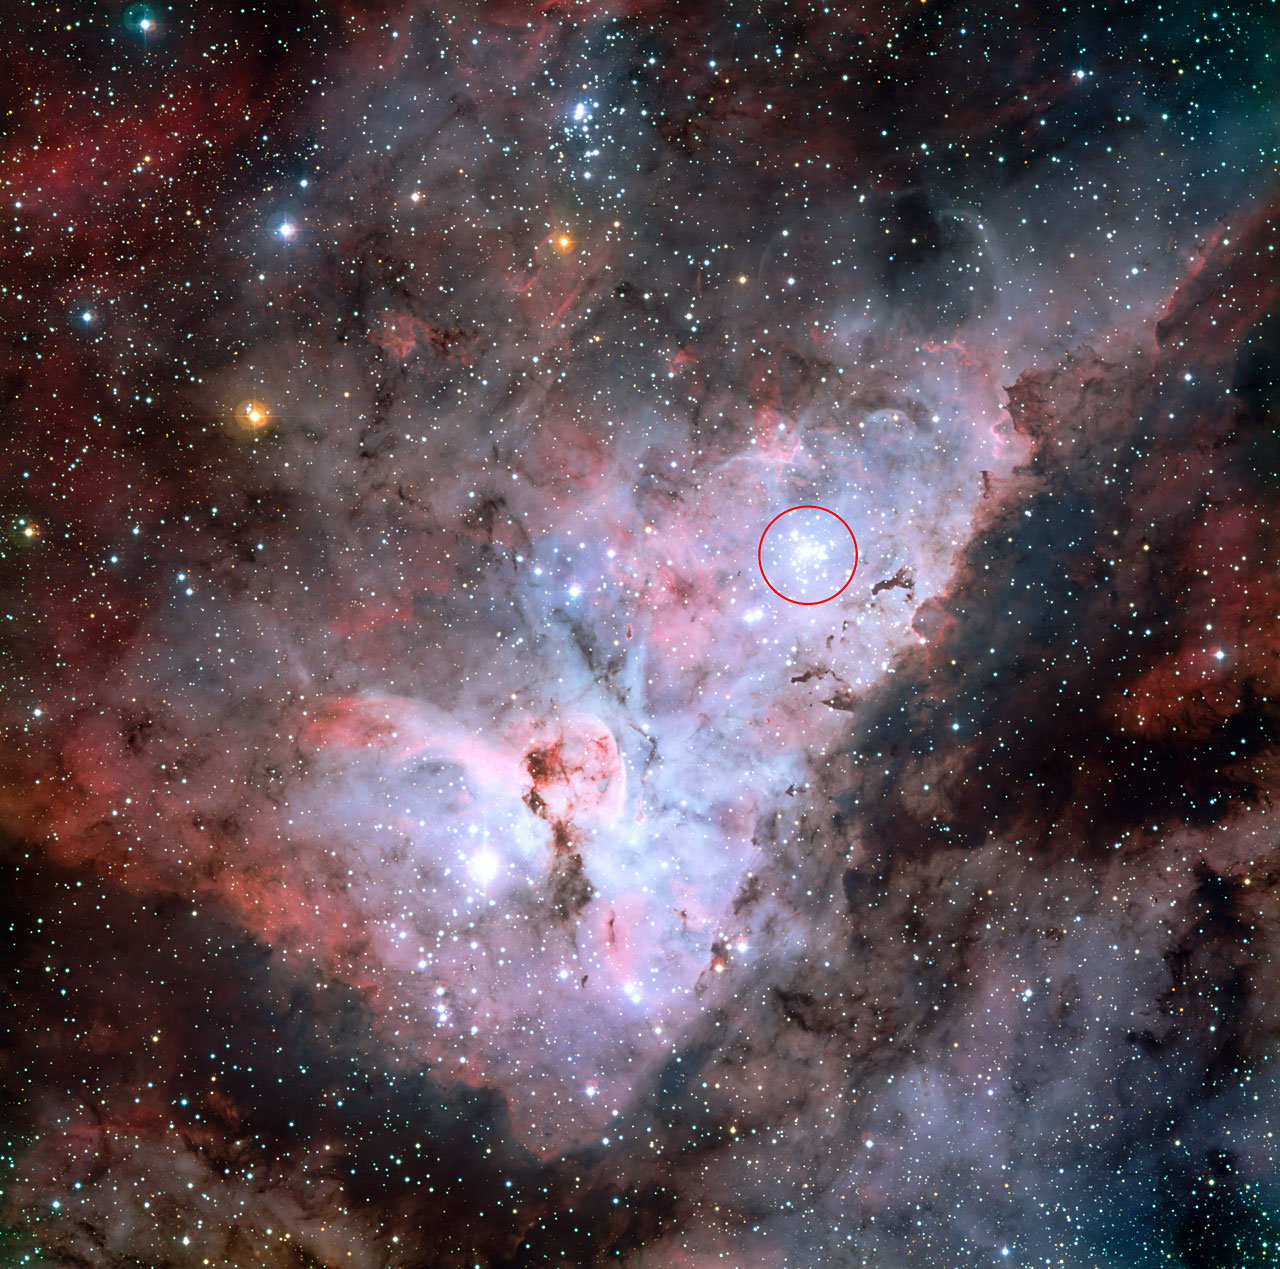 Trumpler 14 embedded in the Carina Nebula